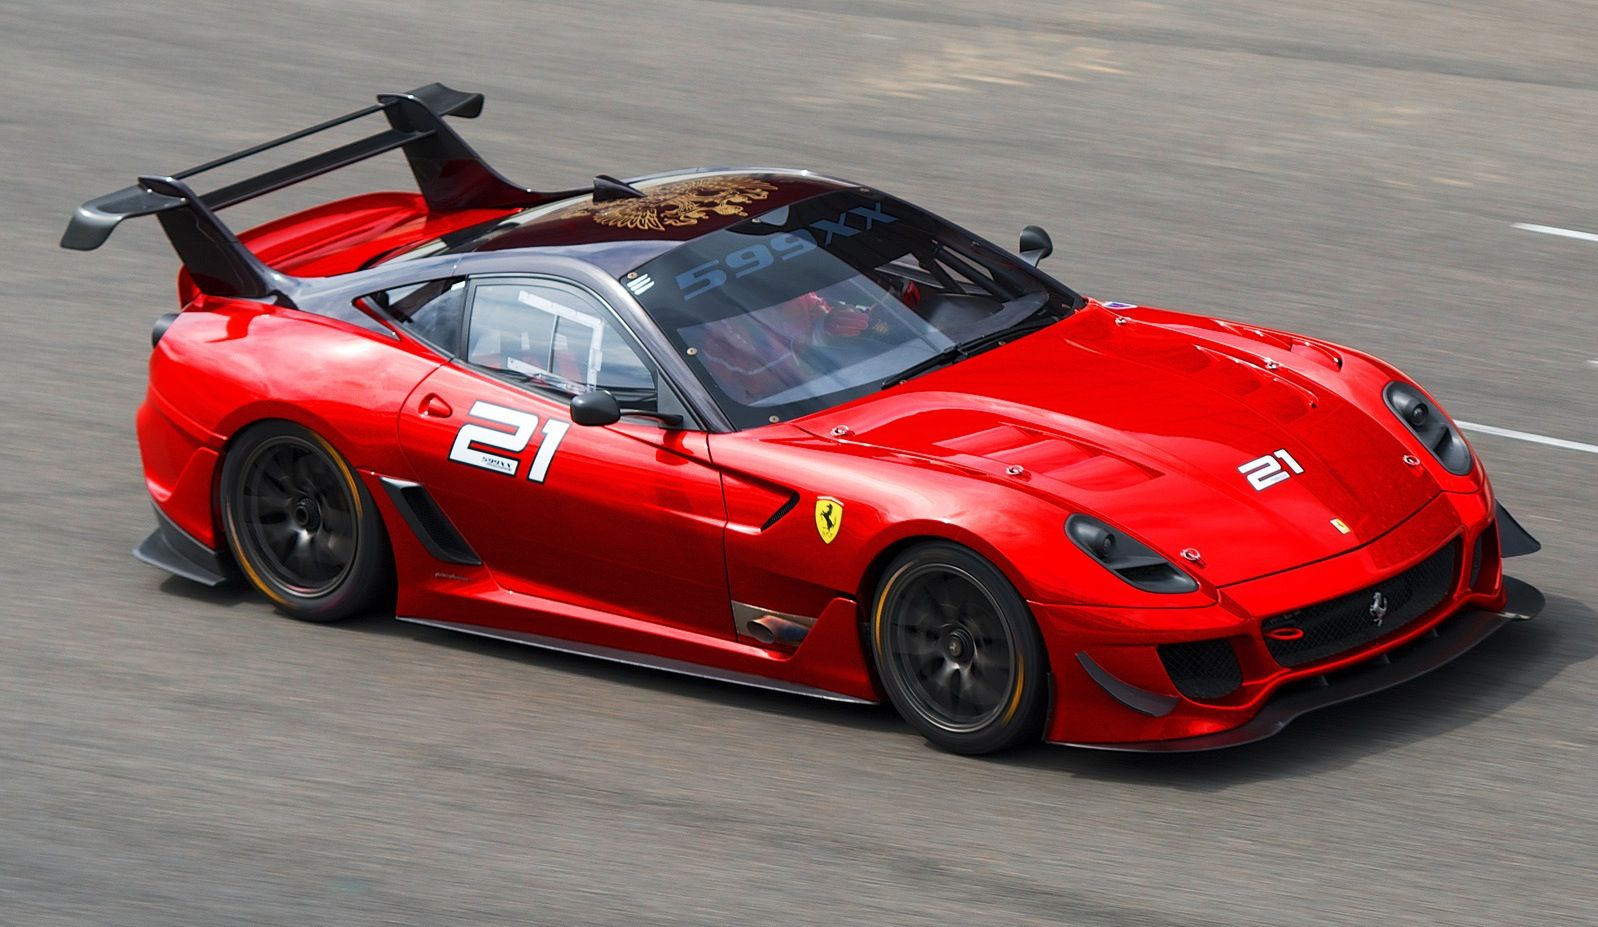 Red Ferrari 599XX Evoluzione speeding on a race track